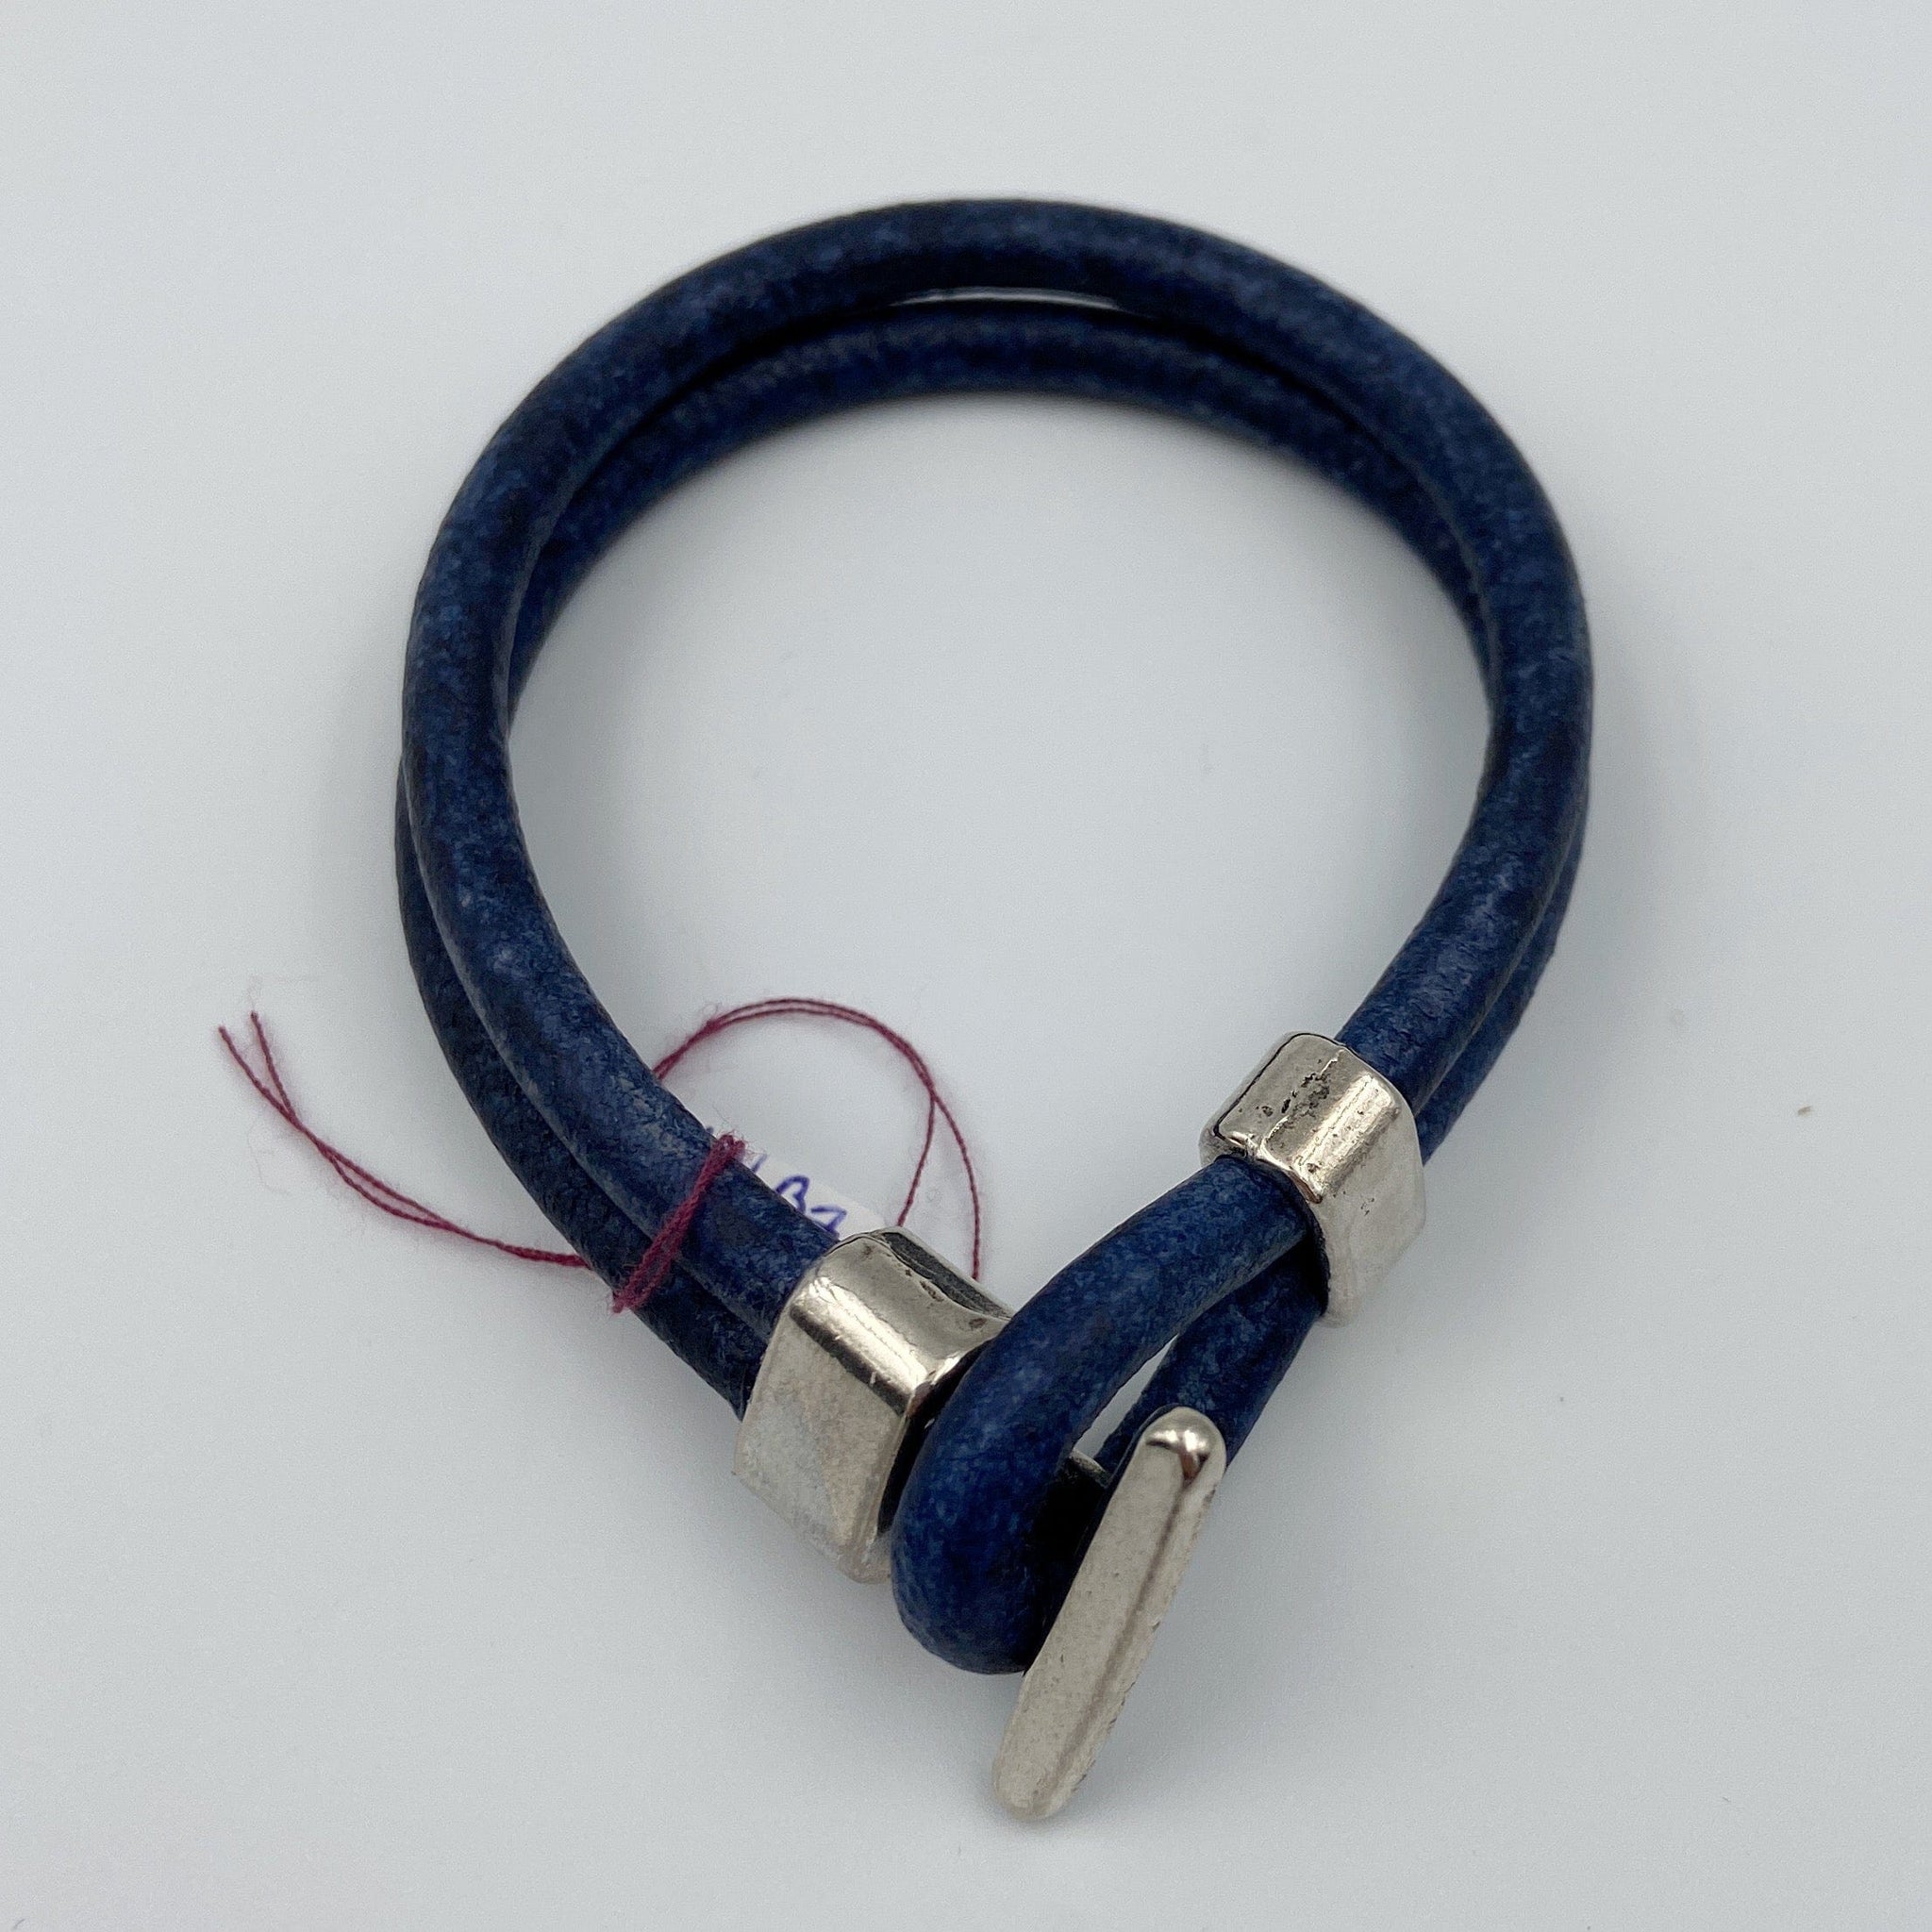 Steel Knot Leather Loop Bracelet Black